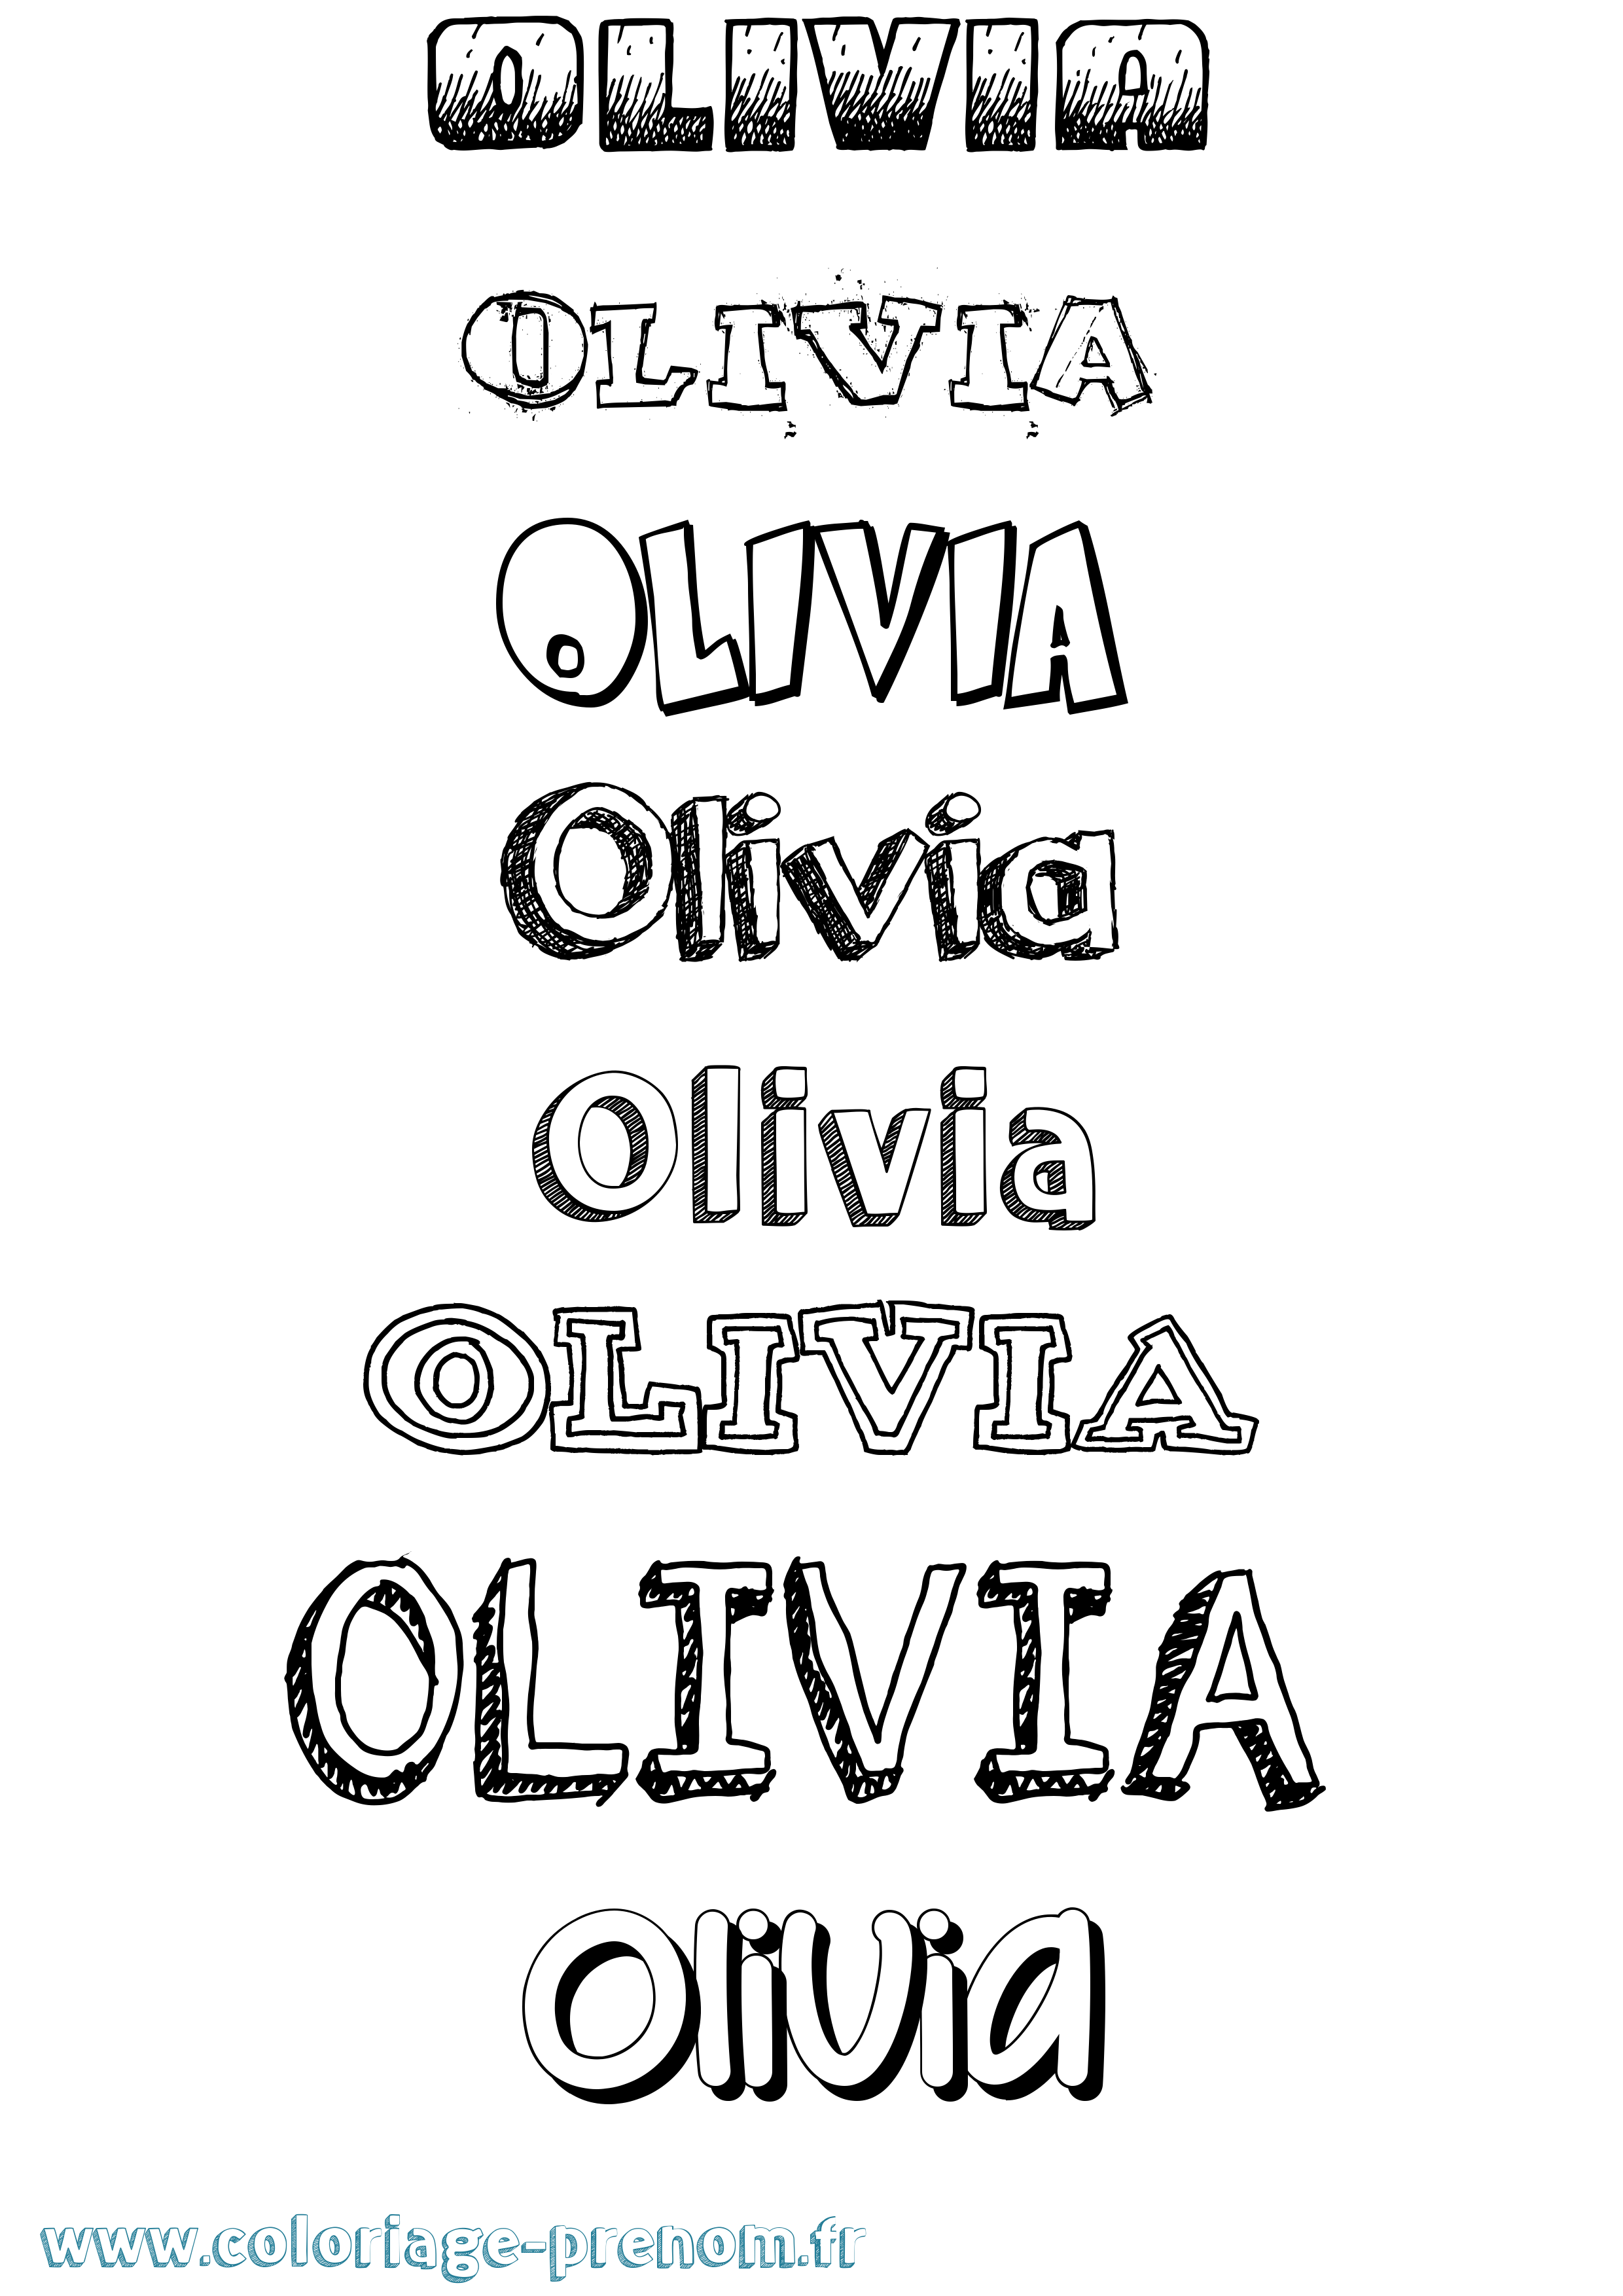 Coloriage prénom Olivia